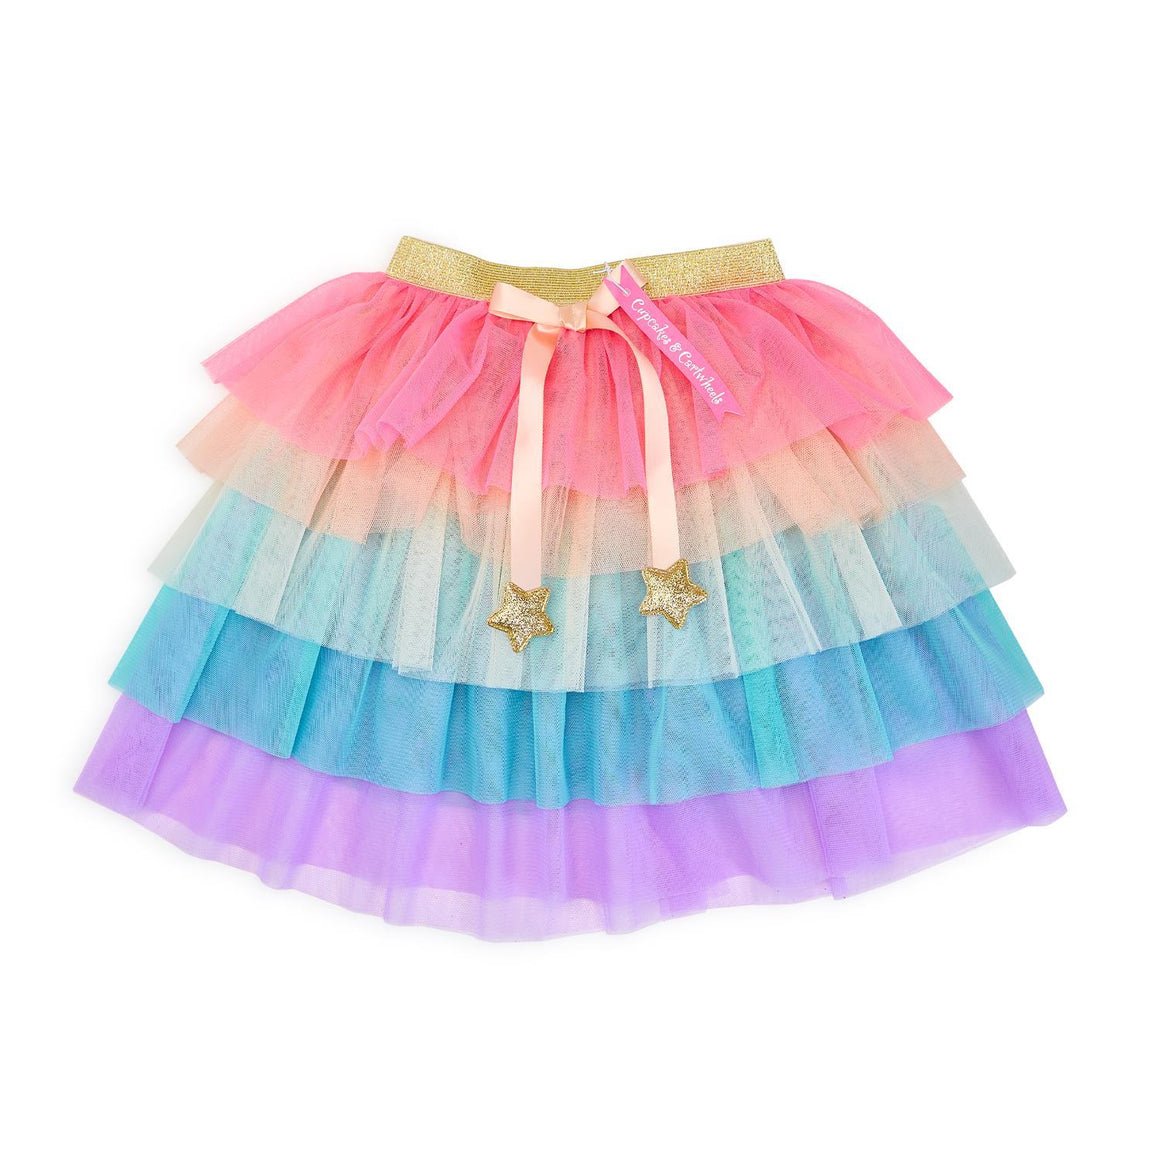 Rainbow Tulle Dress Up Skirt